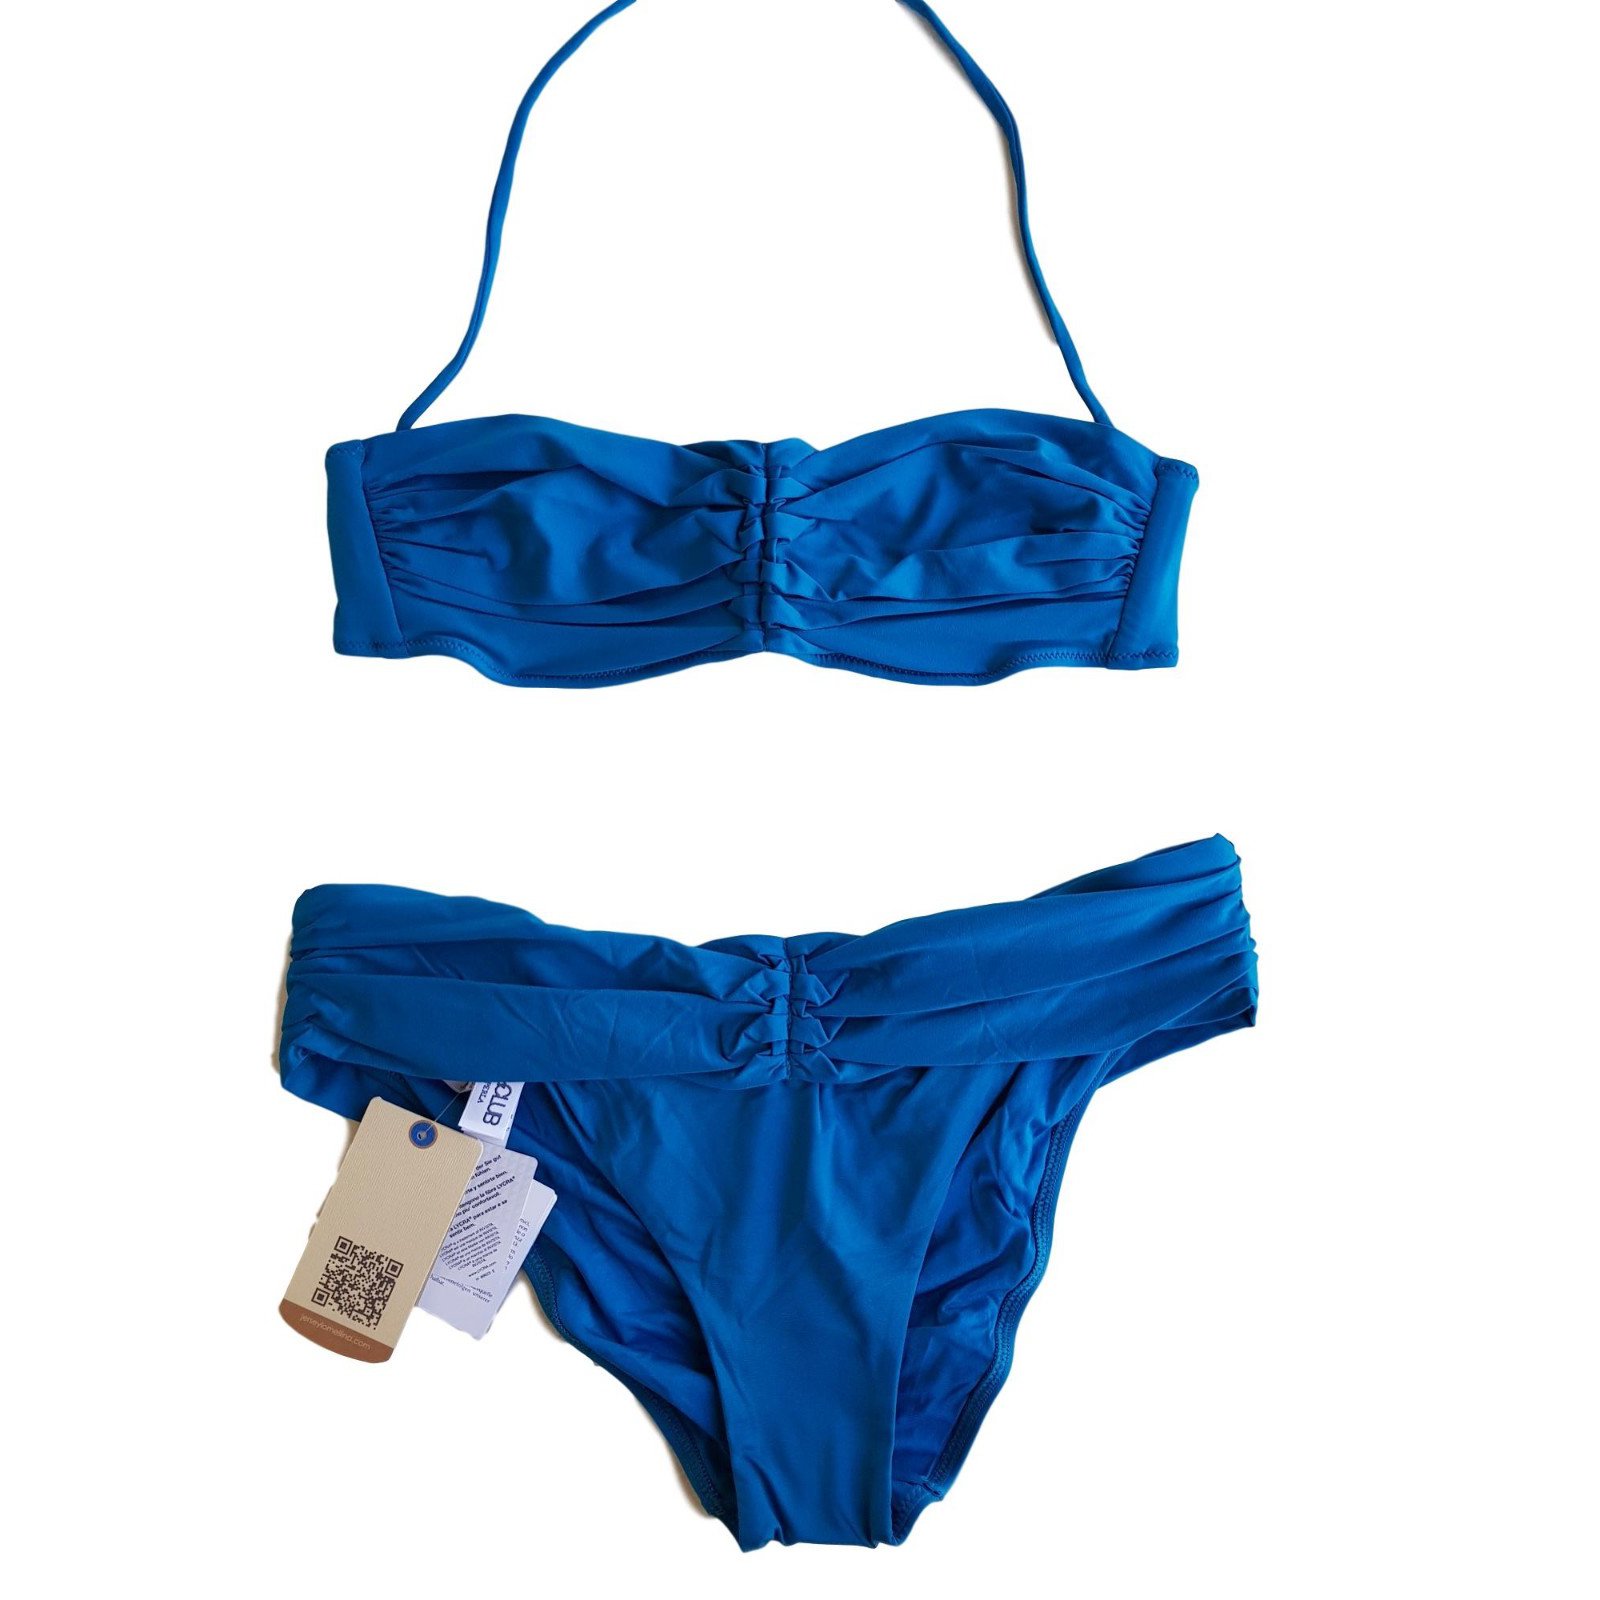 https://cdn1.jolicloset.com/imgr/full/2018/06/72435-1/la-perla-blue-polyamide-swimwear.jpg